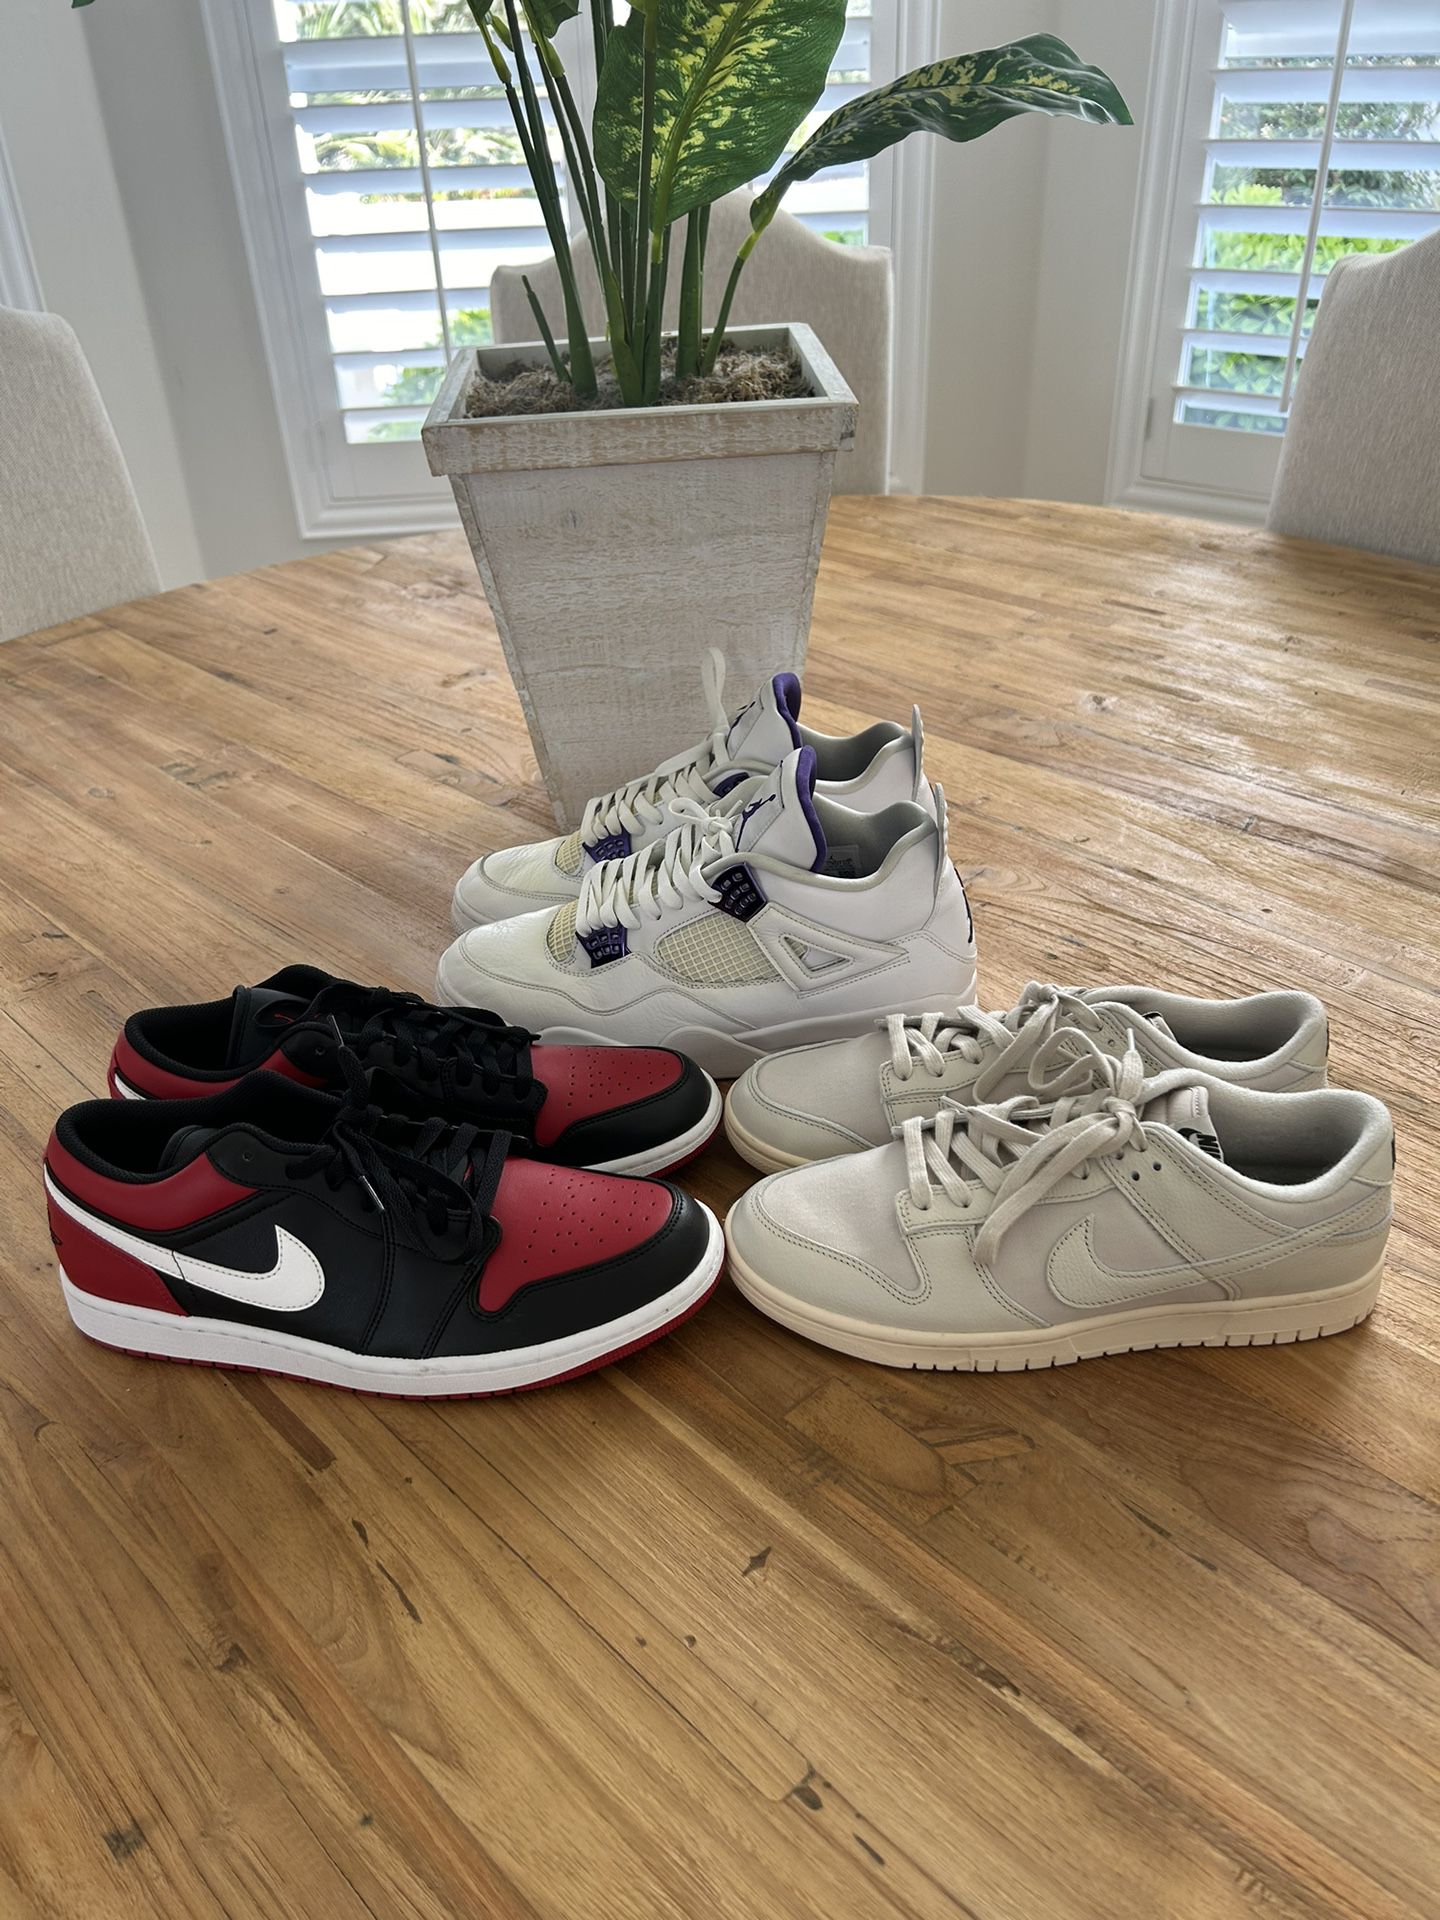 Mens Shoes- Nike Dunks, Jordan 1 And Jordan 4 / Used And New Shoes 